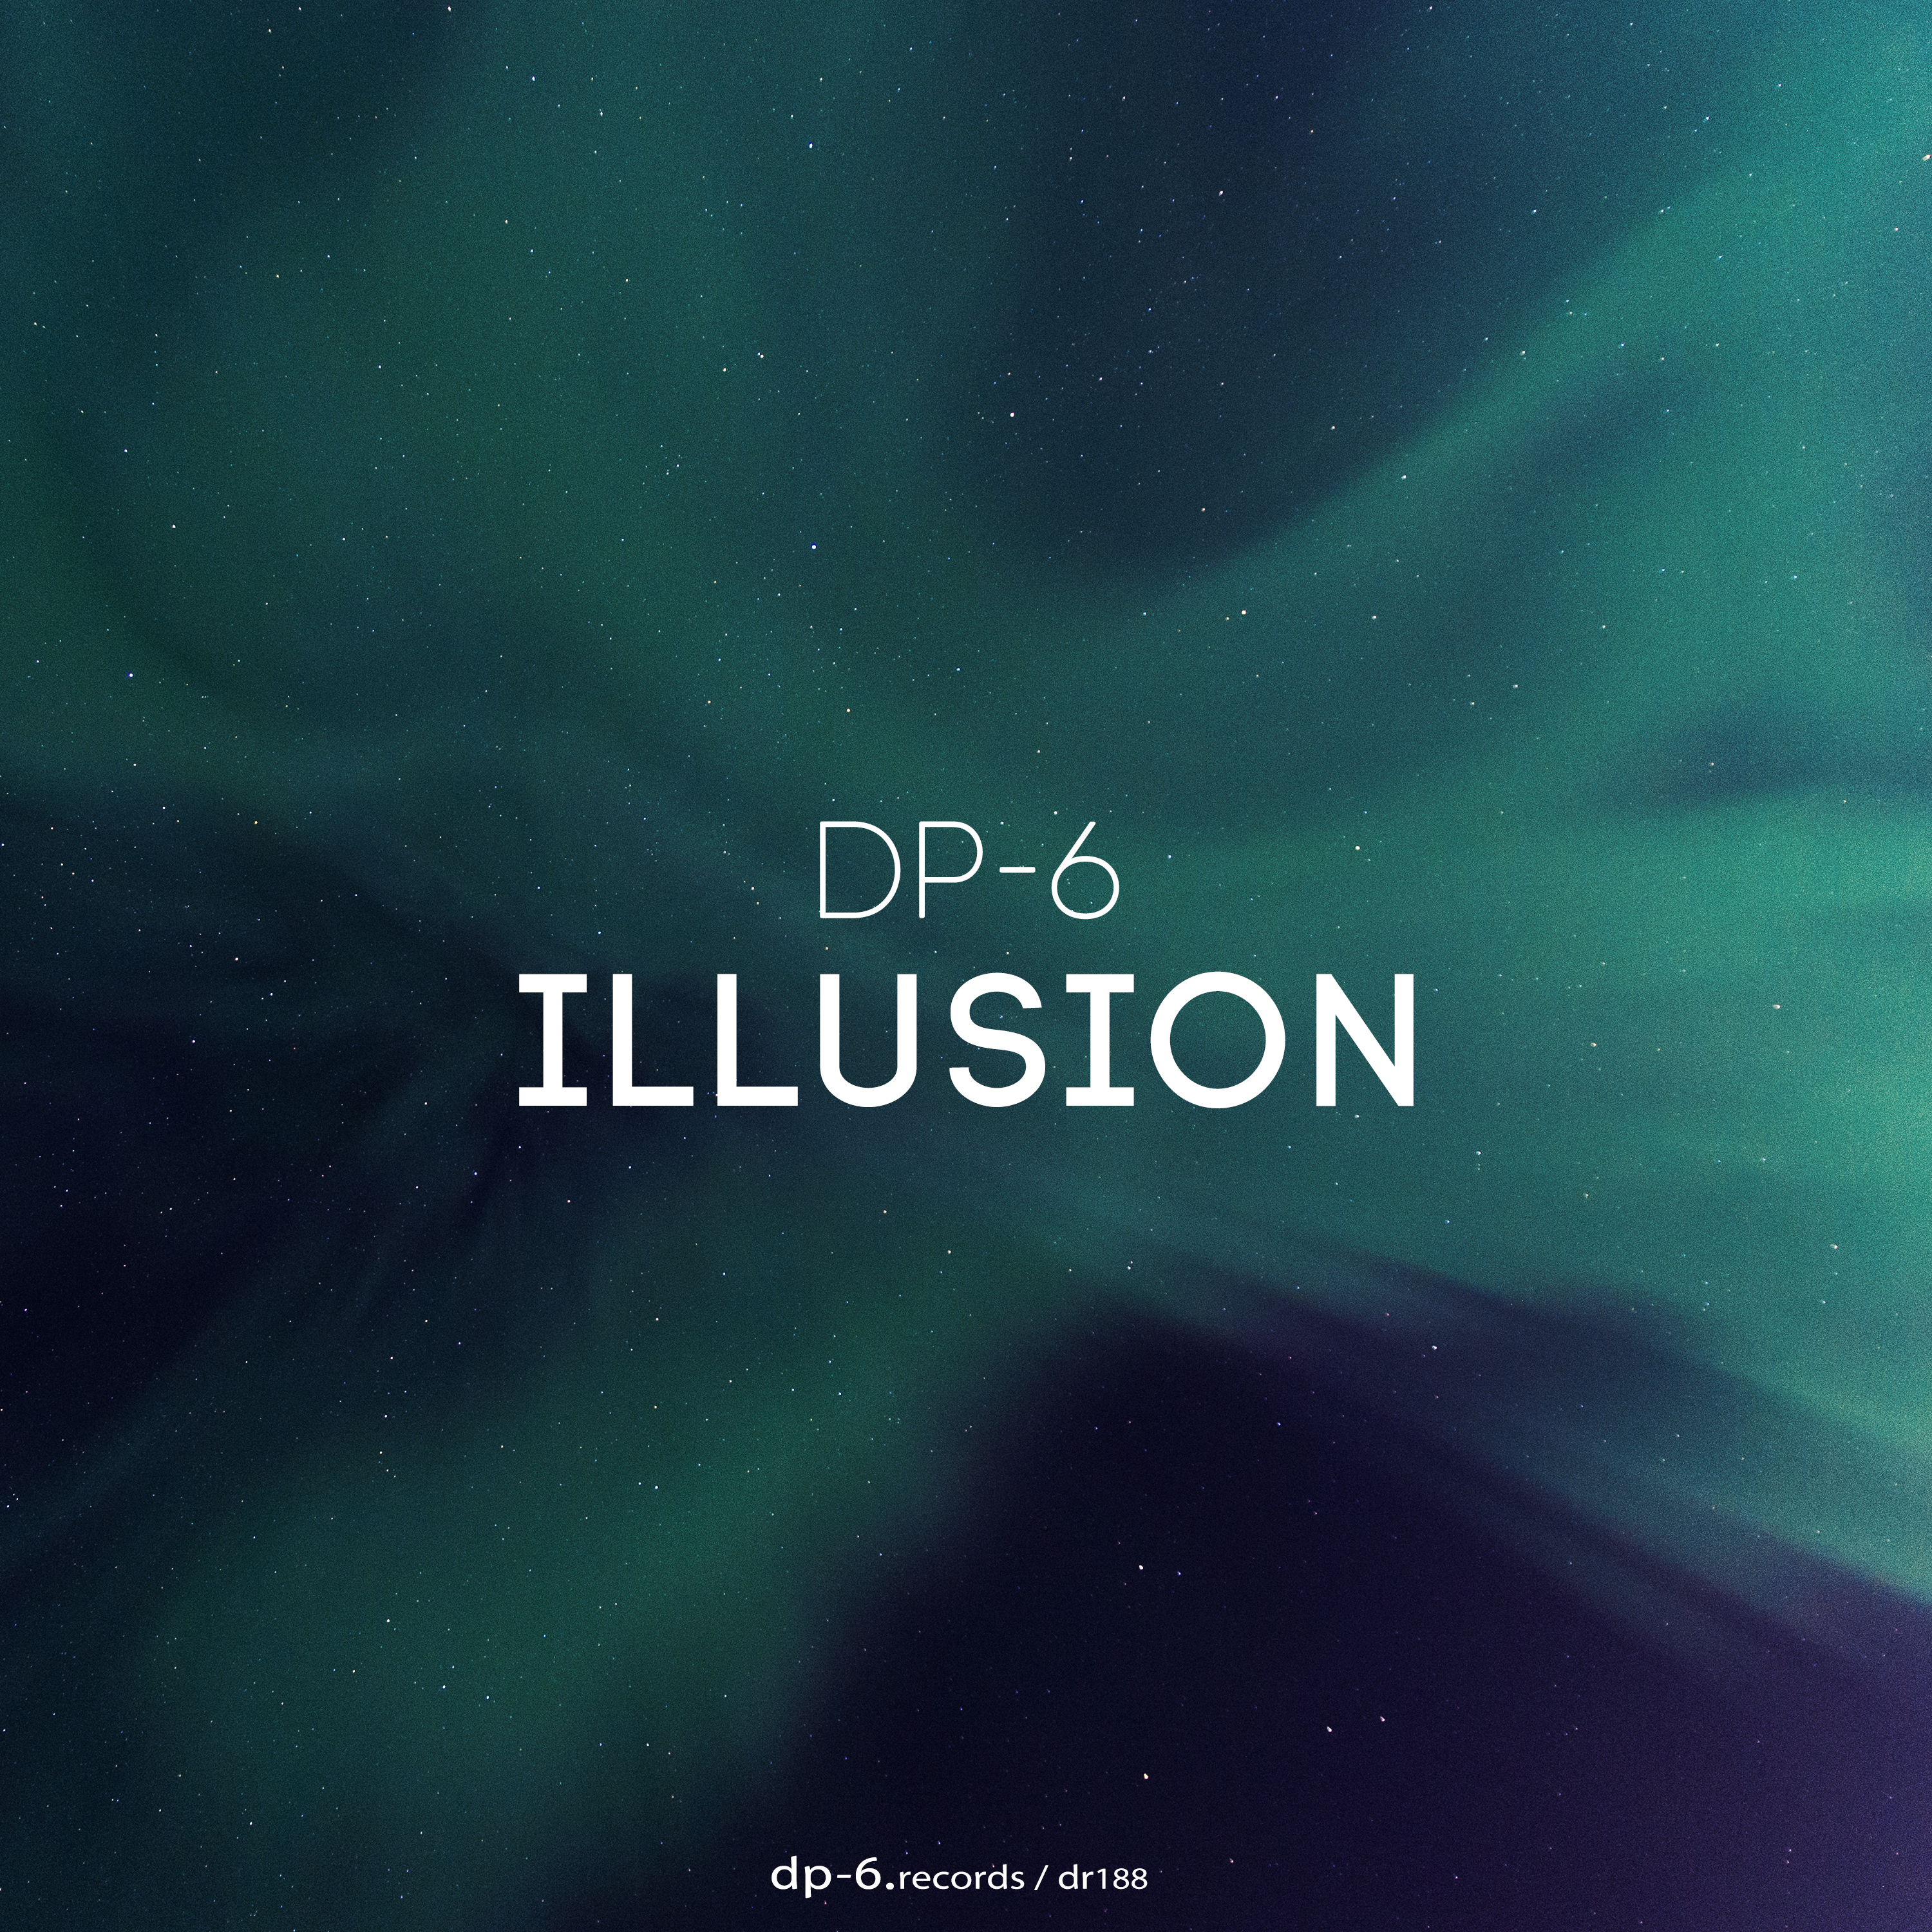 DP-6: Illusion